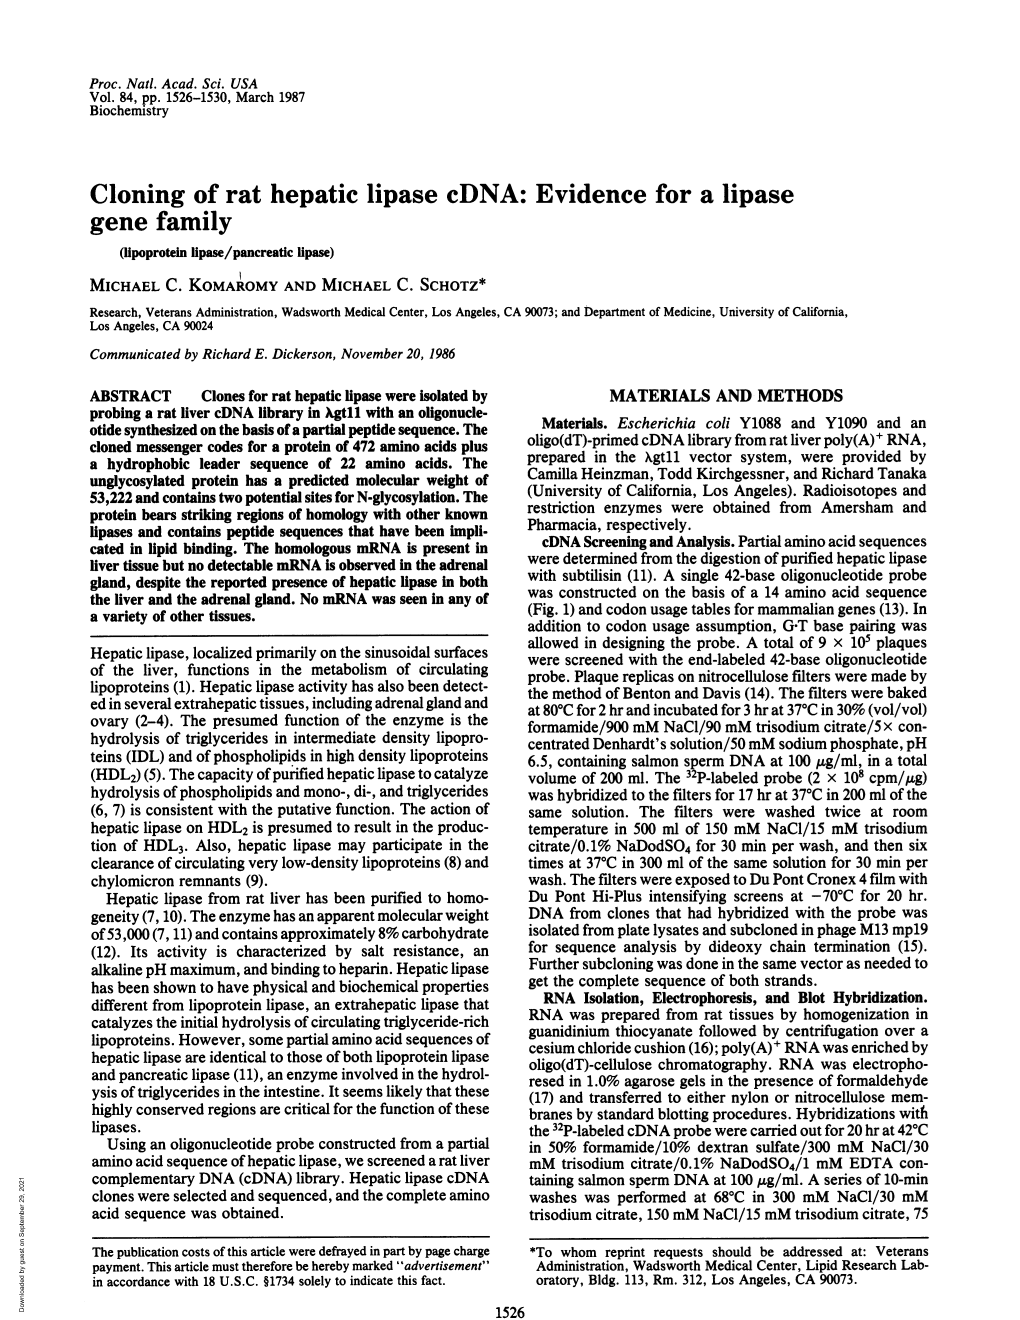 Cloning of Rat Hepatic Lipase Cdna: Evidence for a Lipase Gene Family (Lipoprotein Lipase/Pancreatic Lipase) MICHAEL C